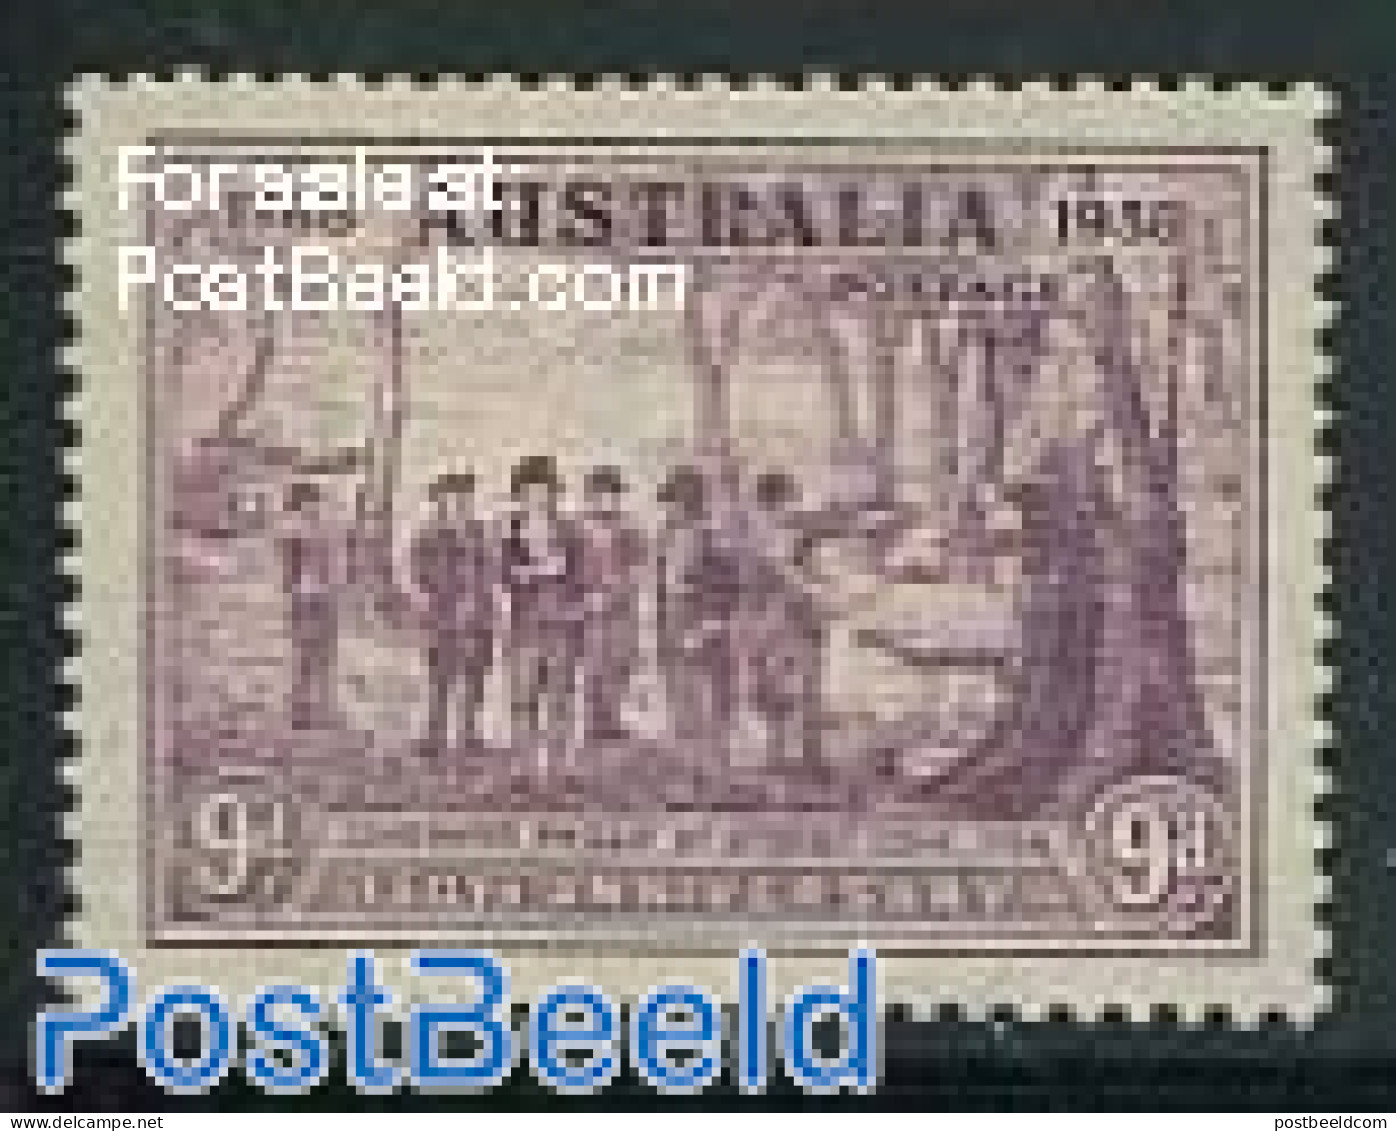 Australia 1937 9p, Stamp Out Of Set, Mint NH - Ongebruikt